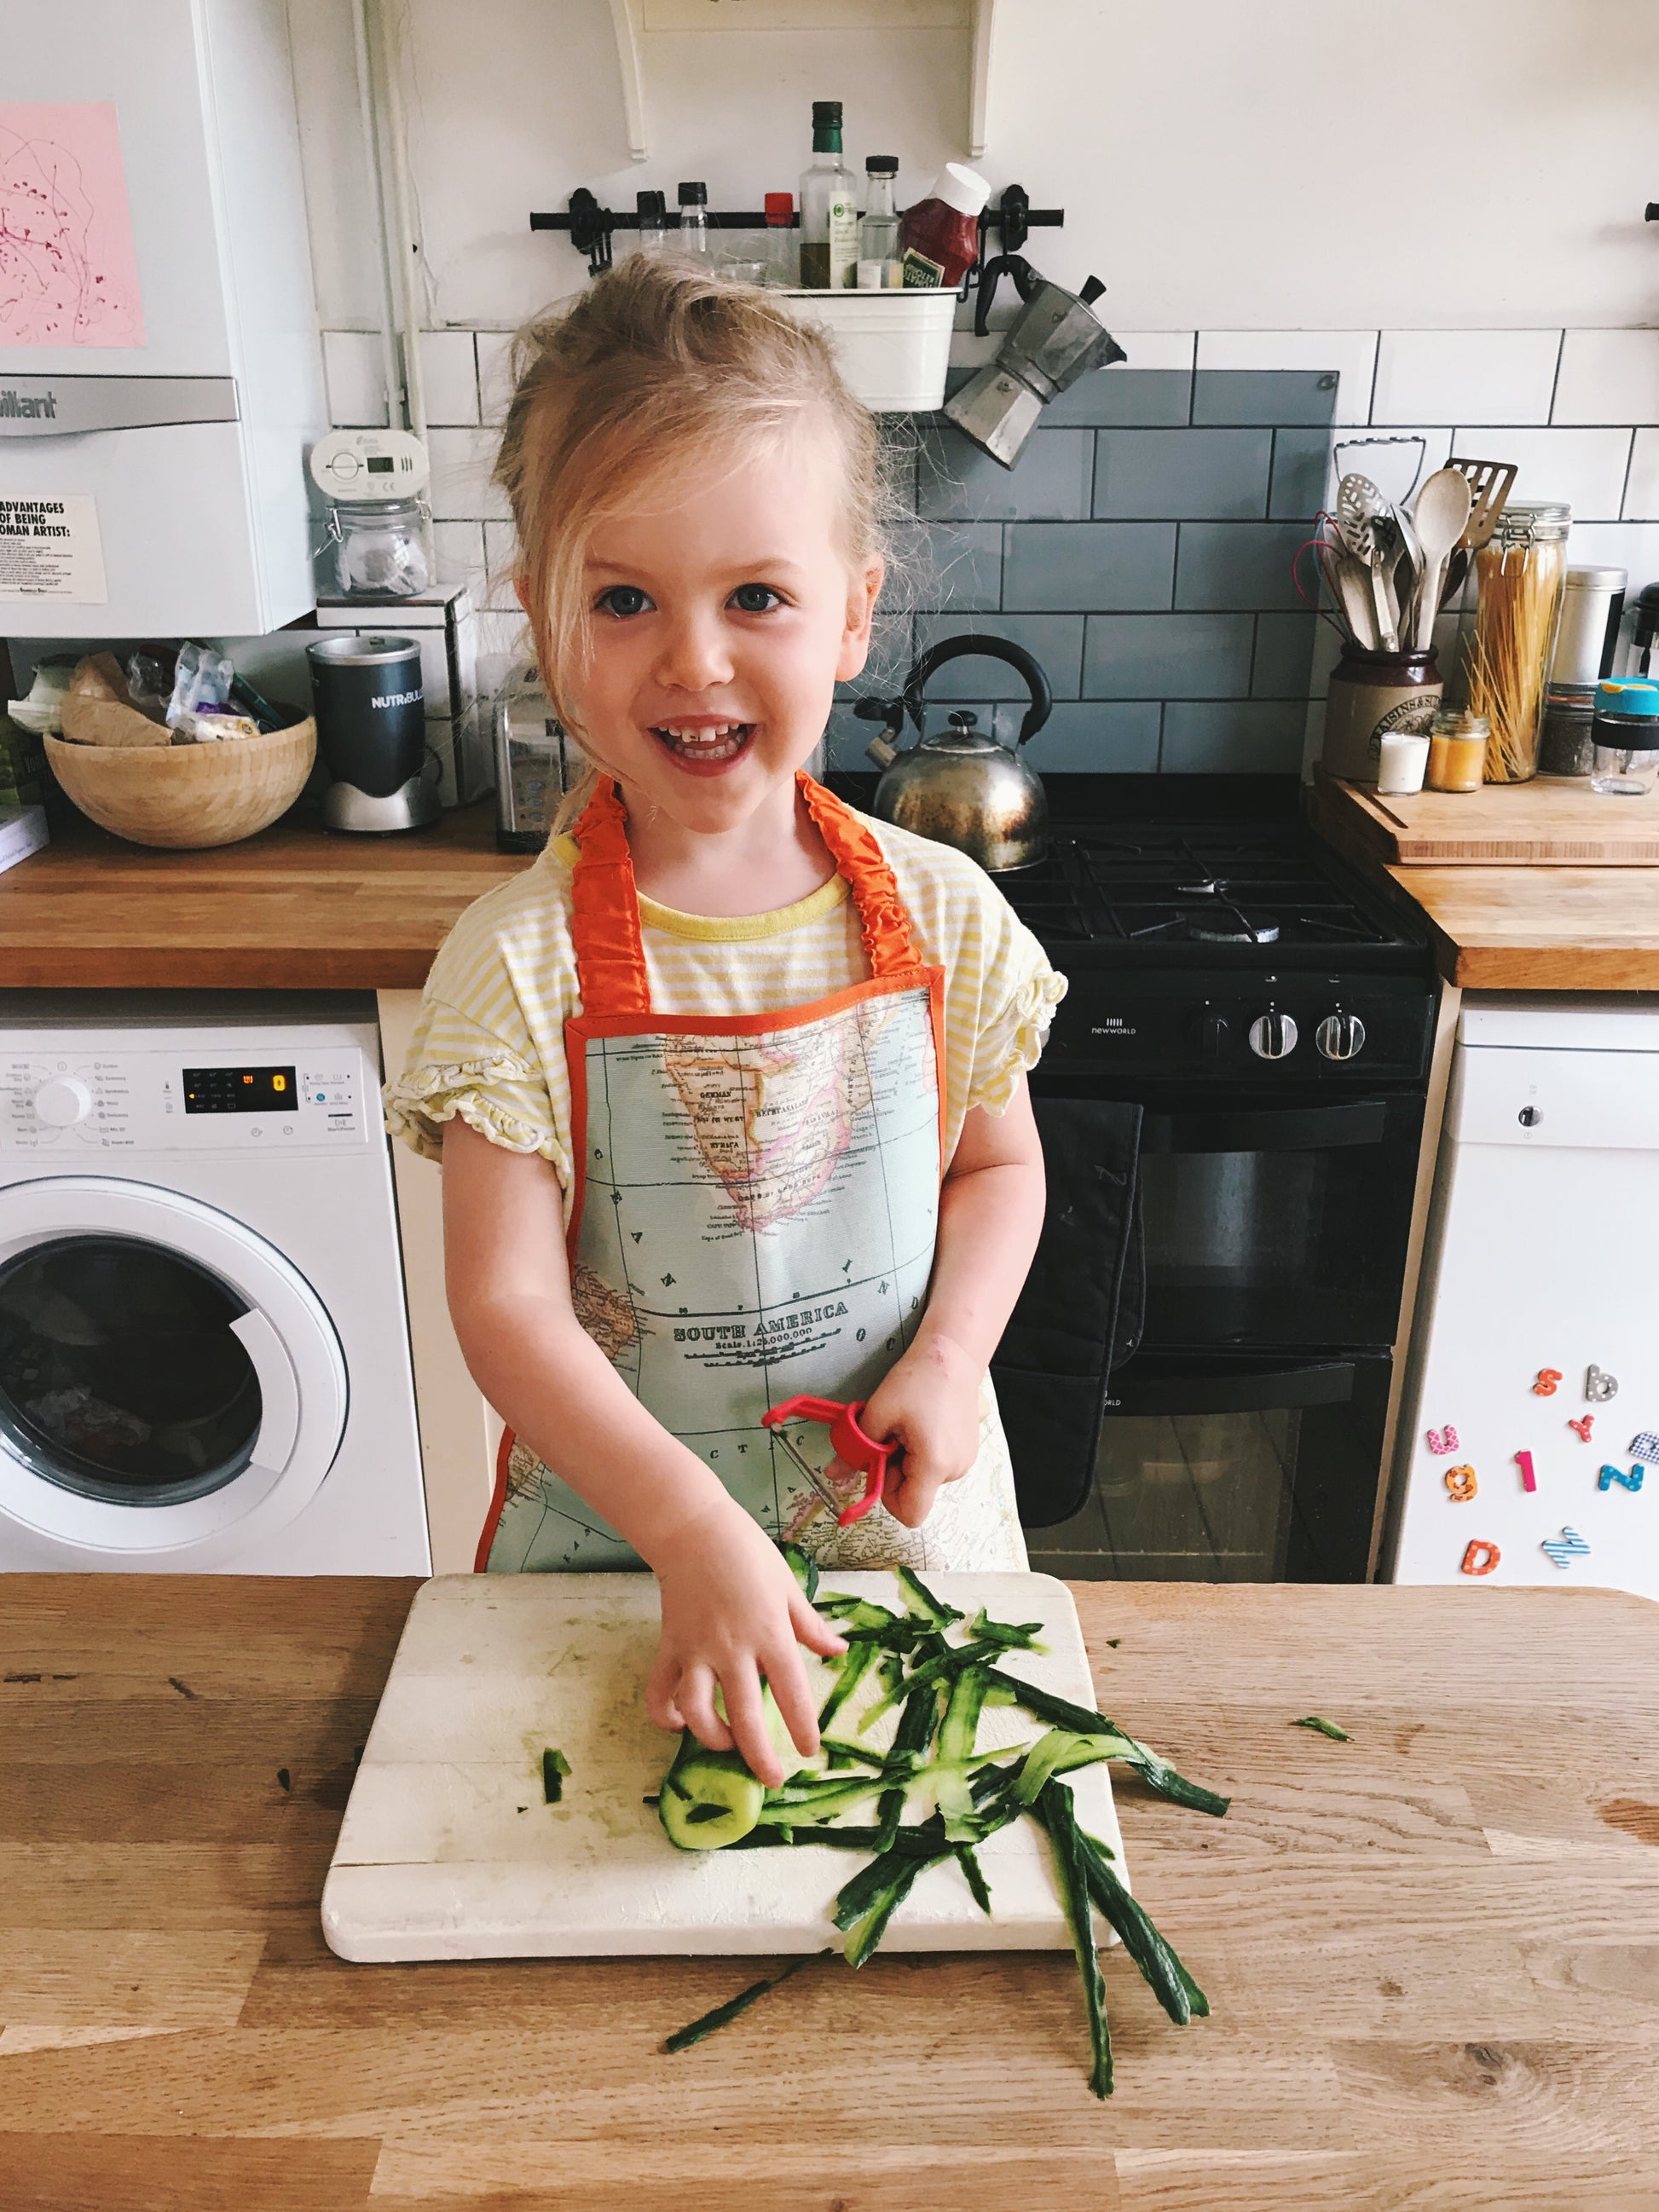 Le Petit Chef Vegetable Peeler for Children I The Montessori Room